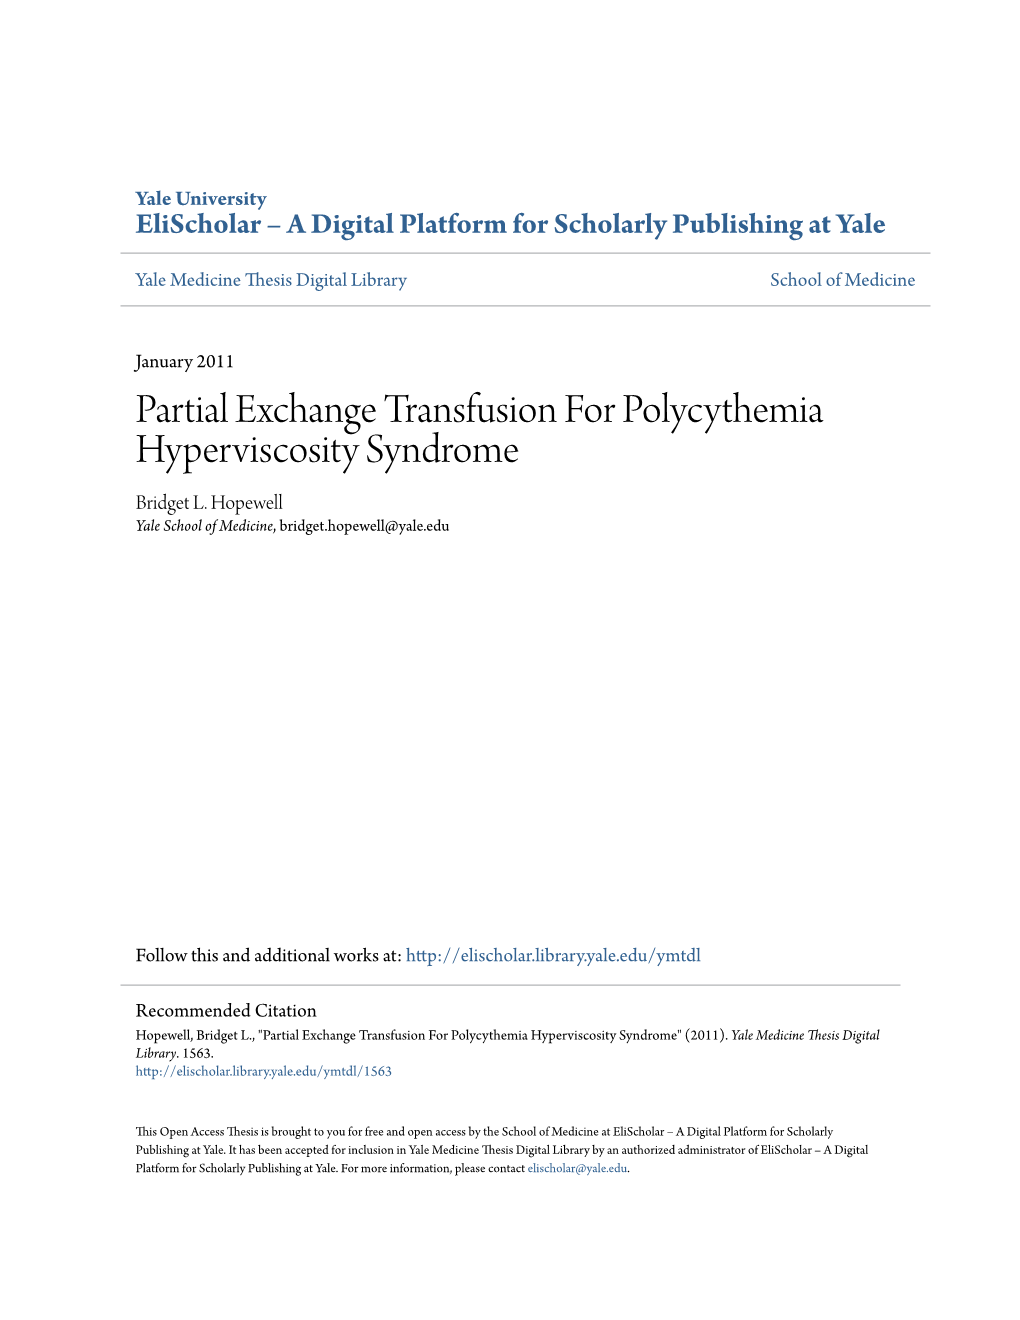 Partial Exchange Transfusion for Polycythemia Hyperviscosity Syndrome Bridget L